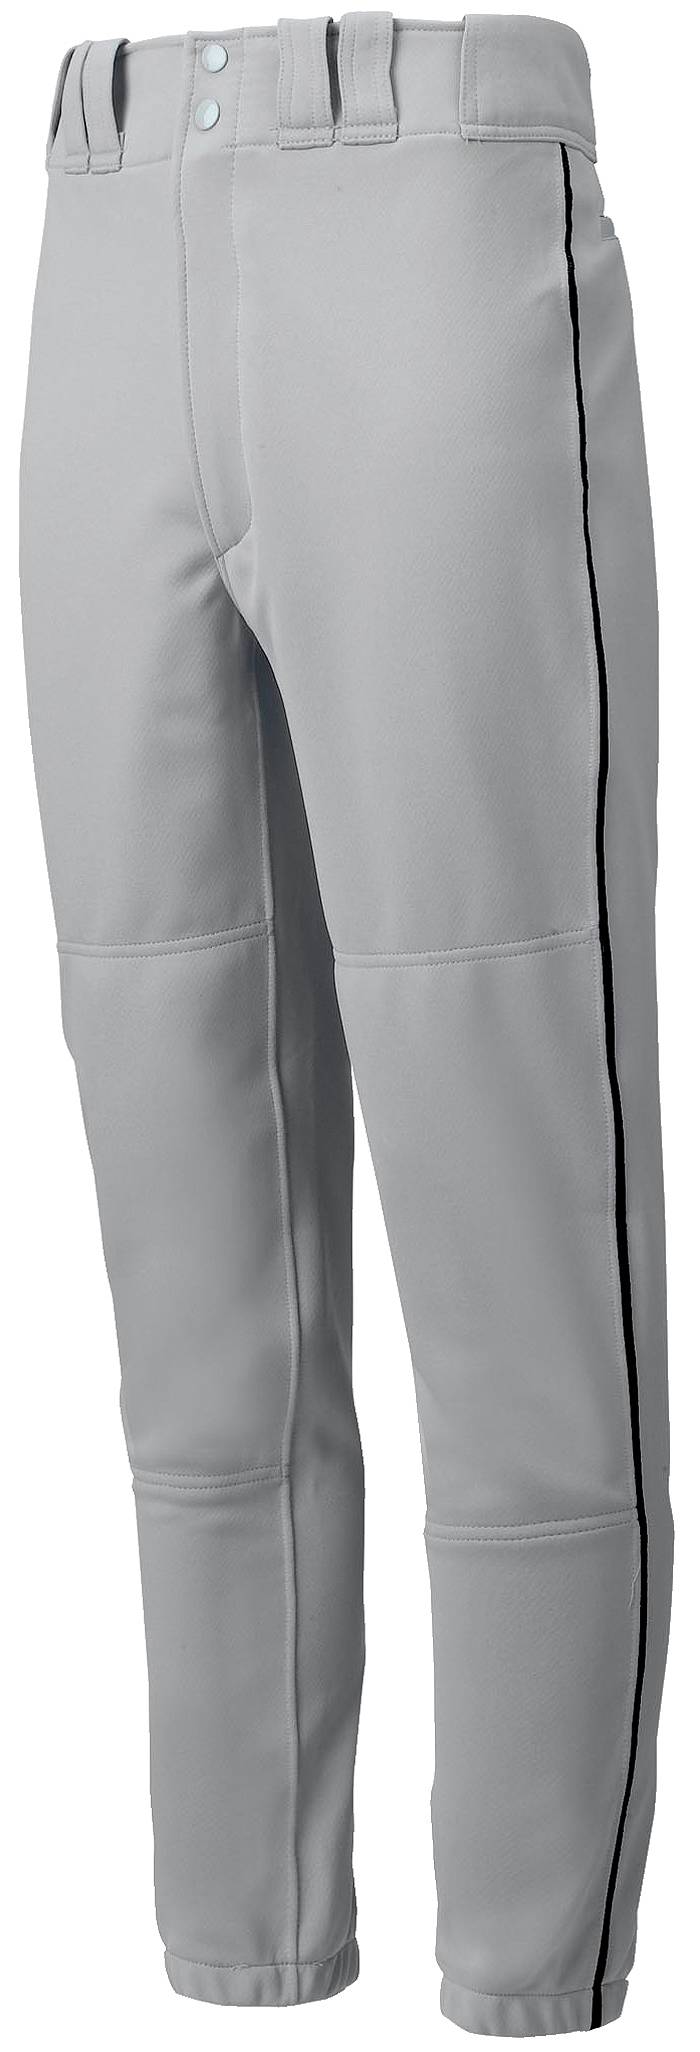 Alleson Athletic Youth Pinstripe Baseball Pant - Medium - Grey / Navy